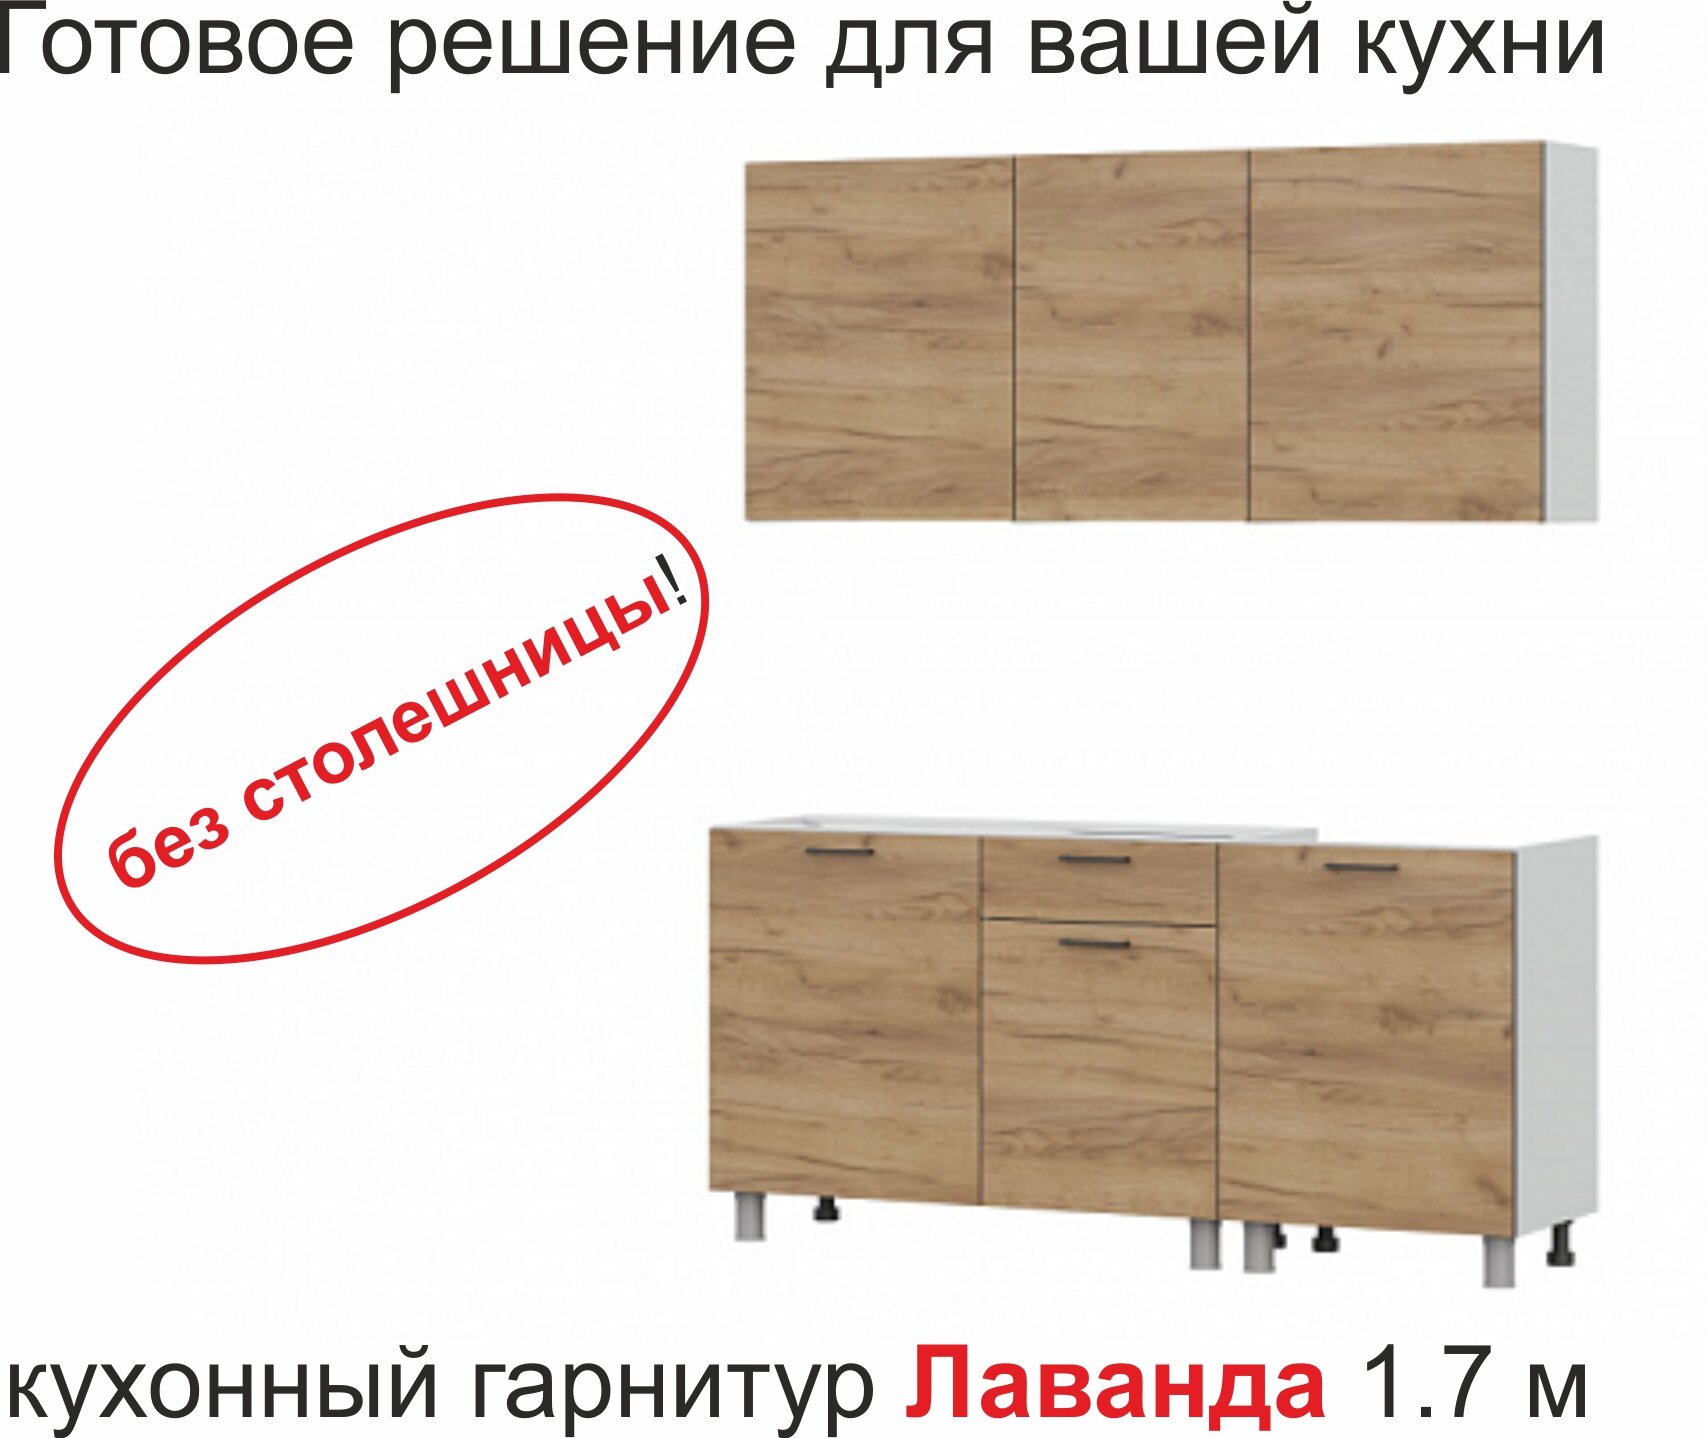 Кухонный гарнитур Лаванда 1.7 без столешницы